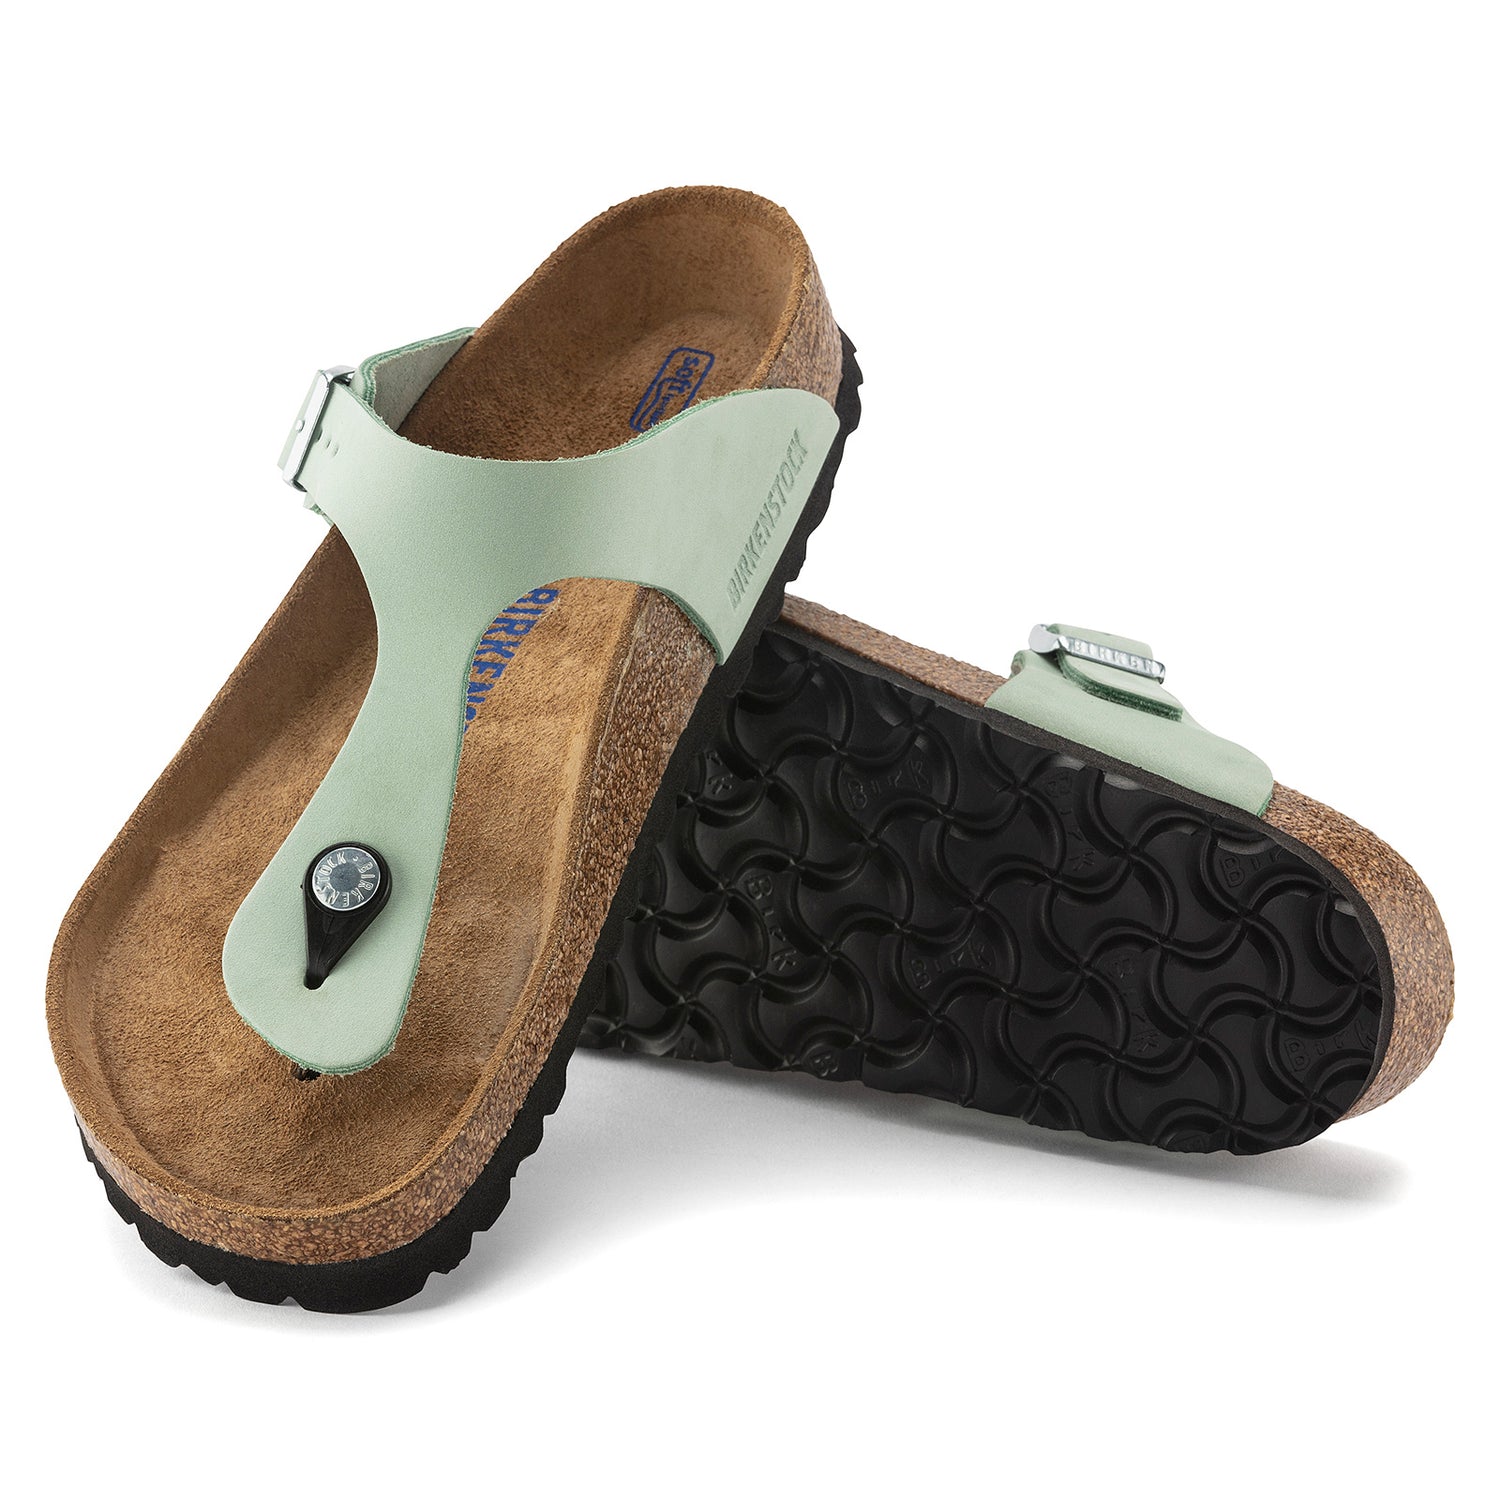 Peltz Shoes  Women's Birkenstock Gizeh Soft Footbed Sandal - Regular Width GREEN 1023 973 R